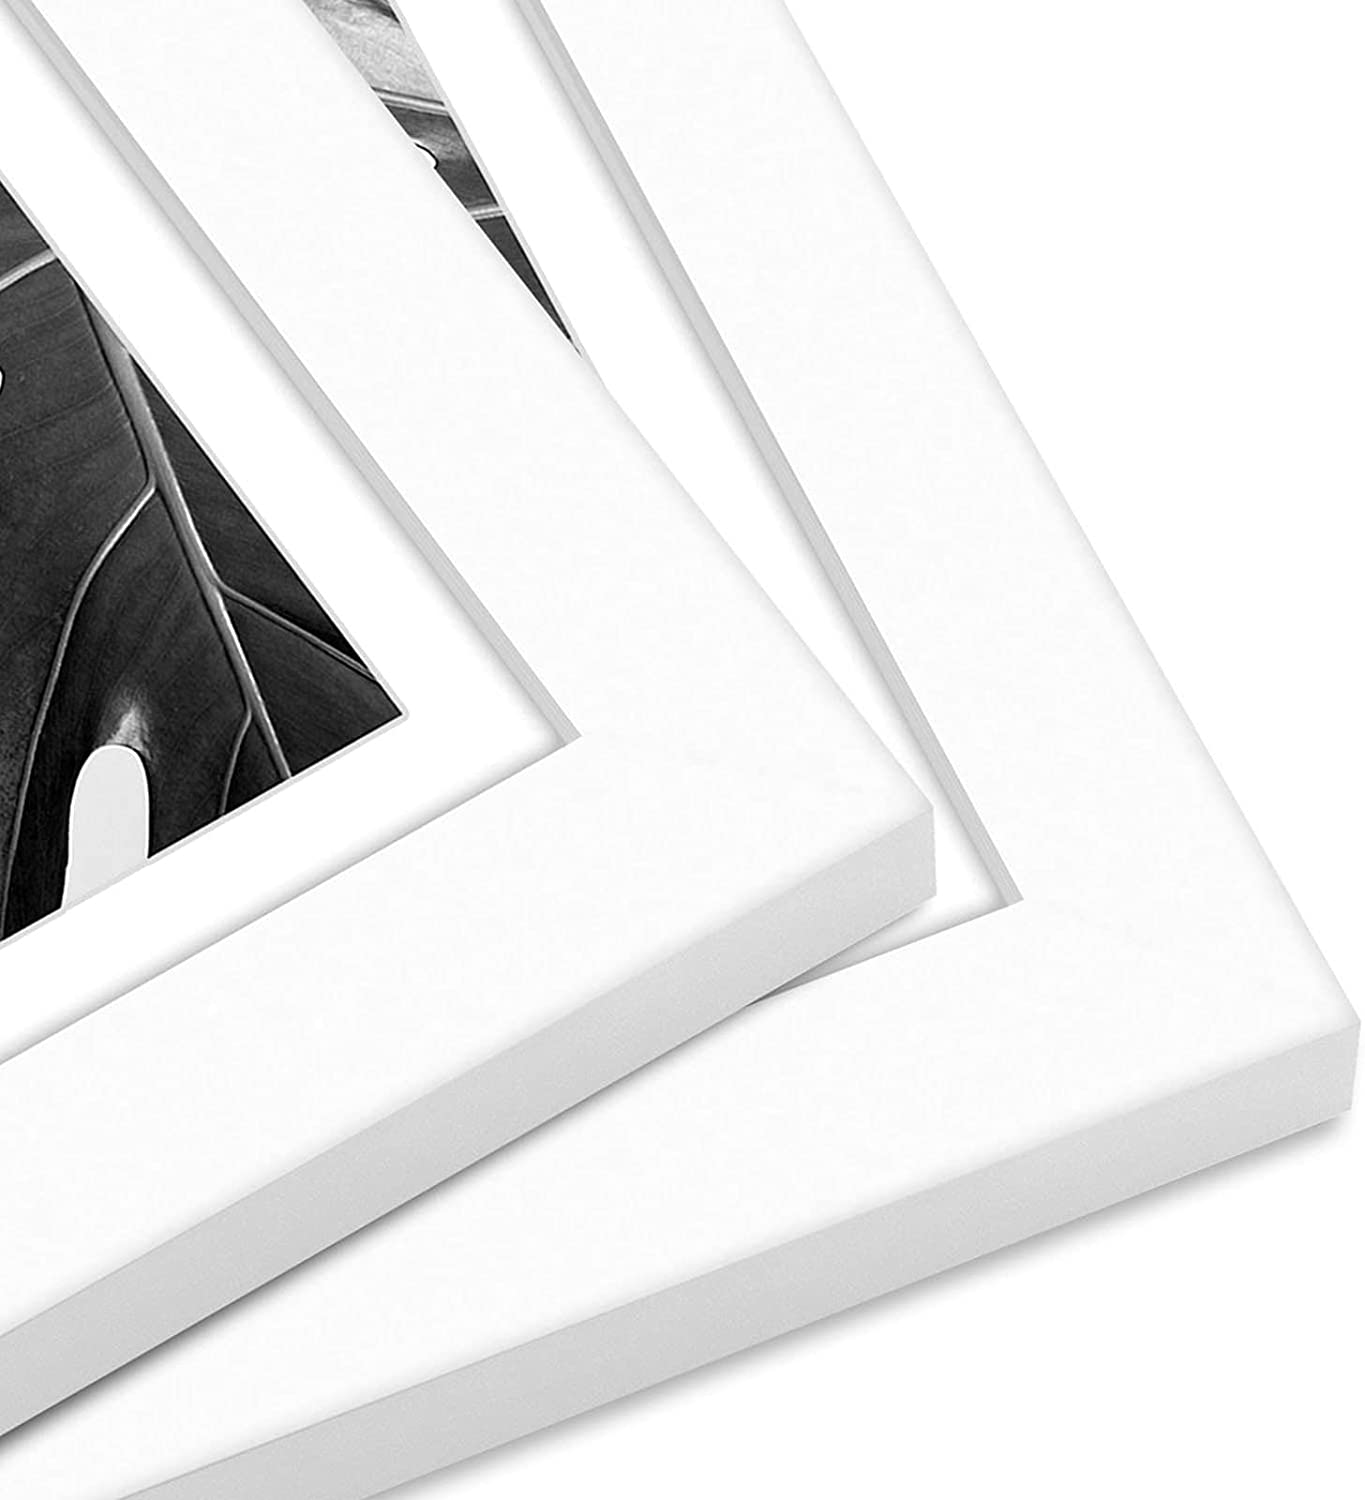 White Cardboard Photo Frame for 4x6, 5x7